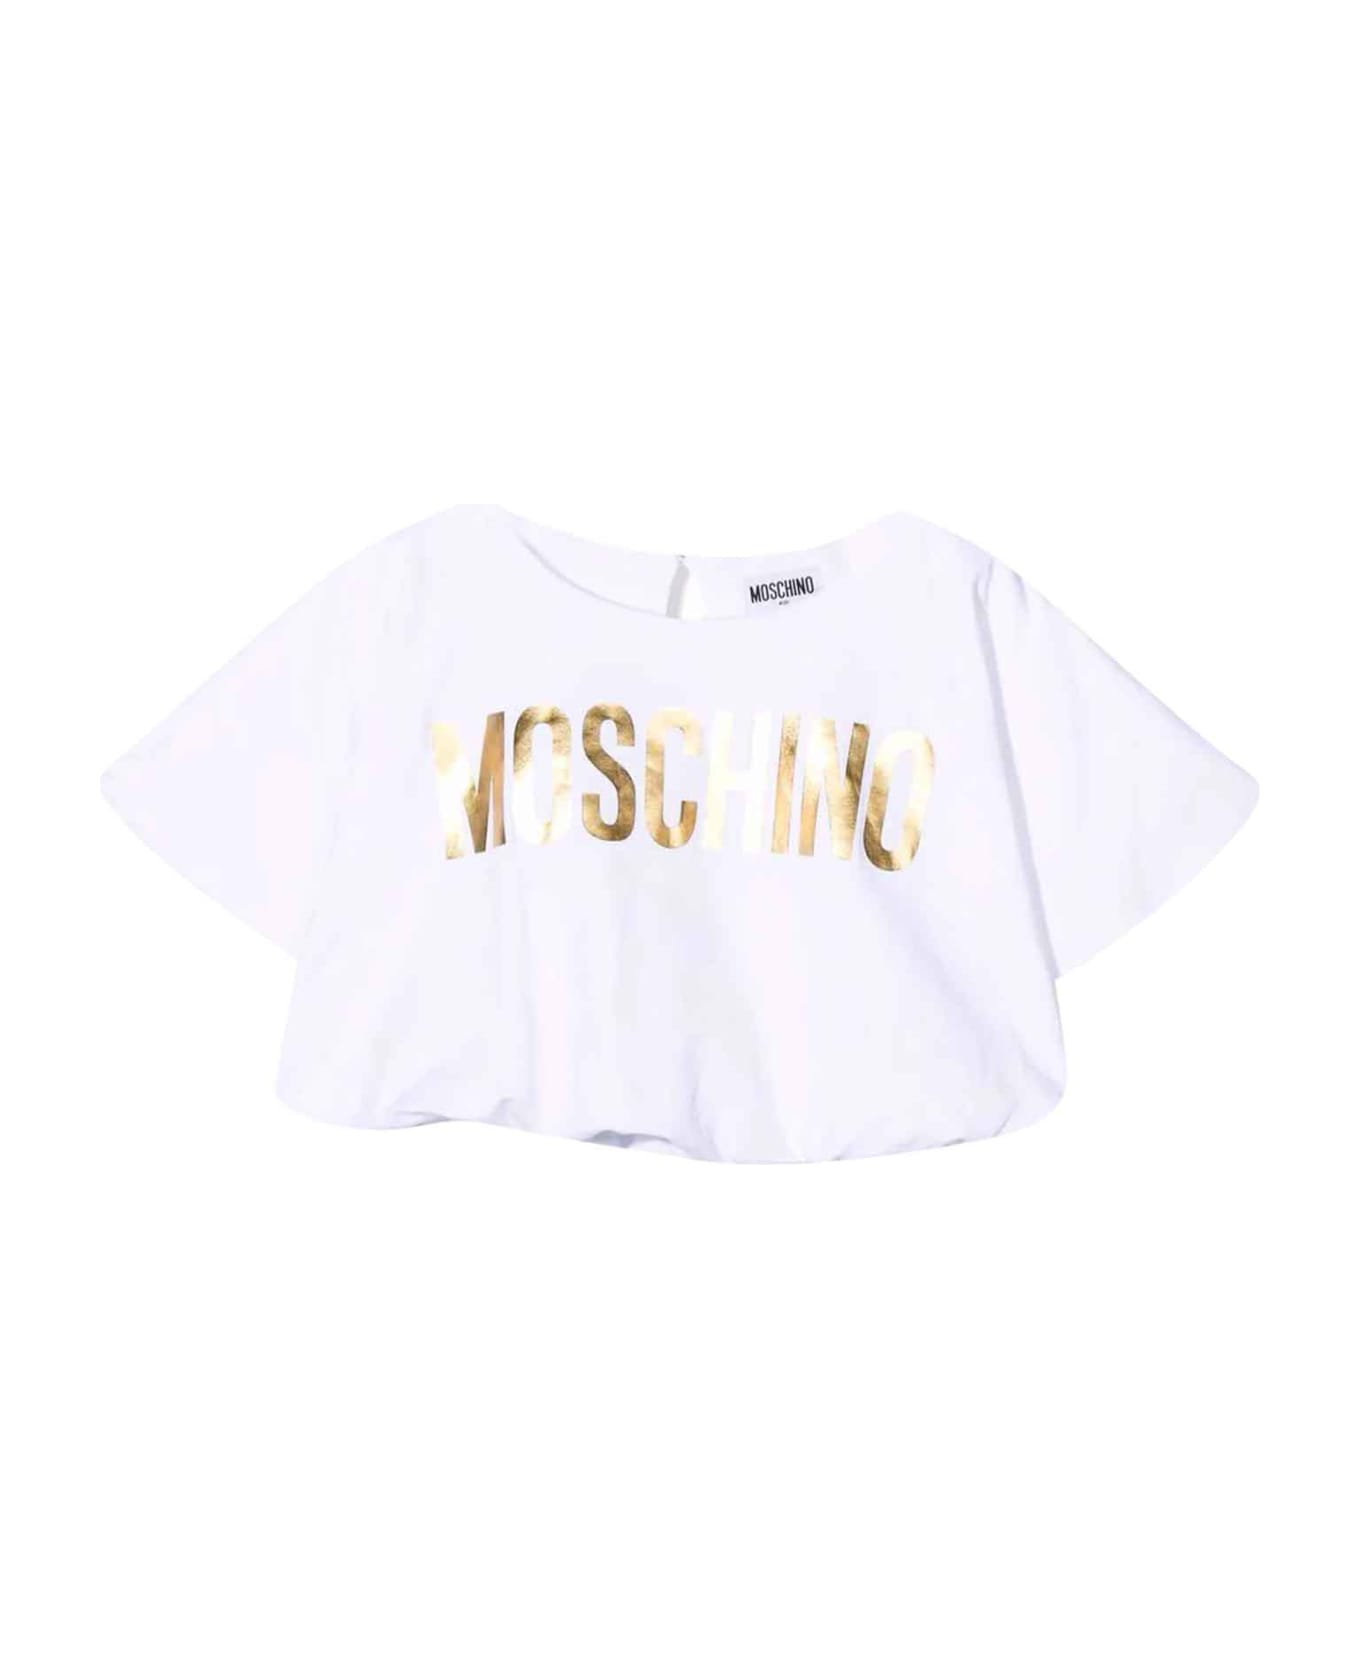 Moschino White T-shirt With Gold Logo - WHITE